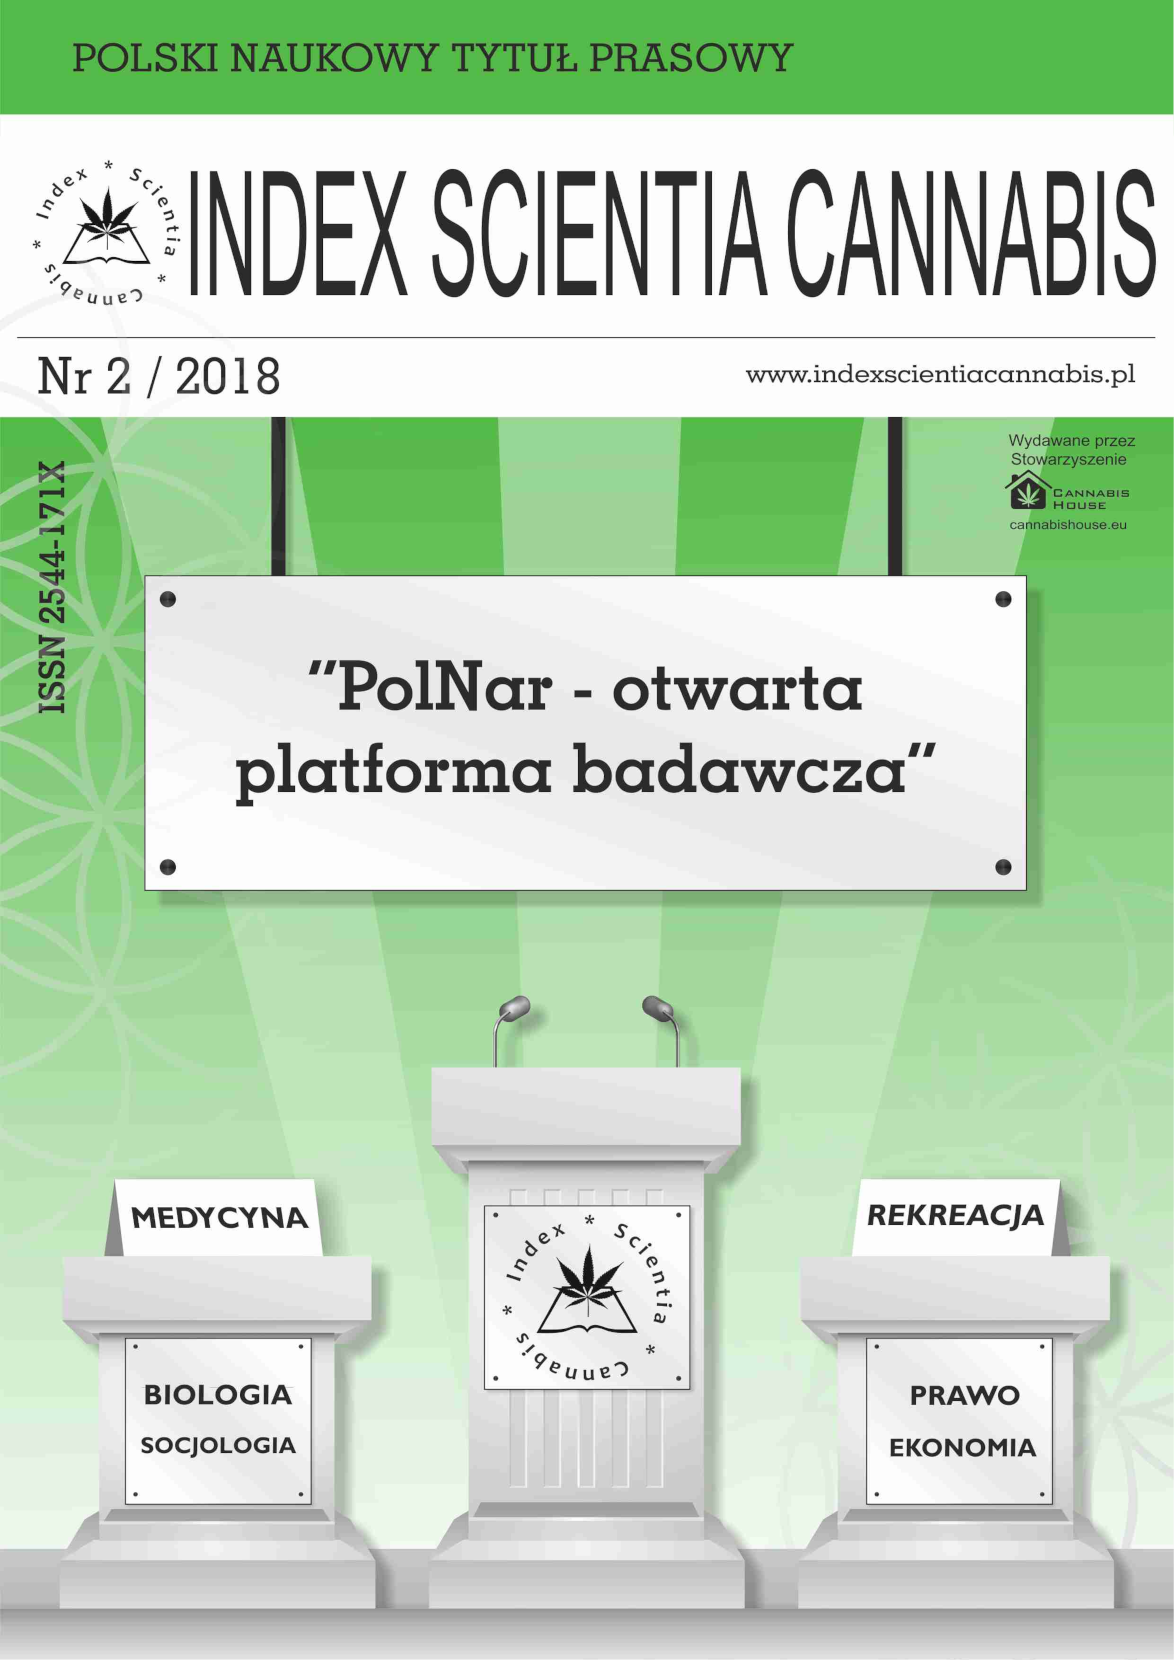 Cover for issue #2 of Index Scientia Cannabis magazine